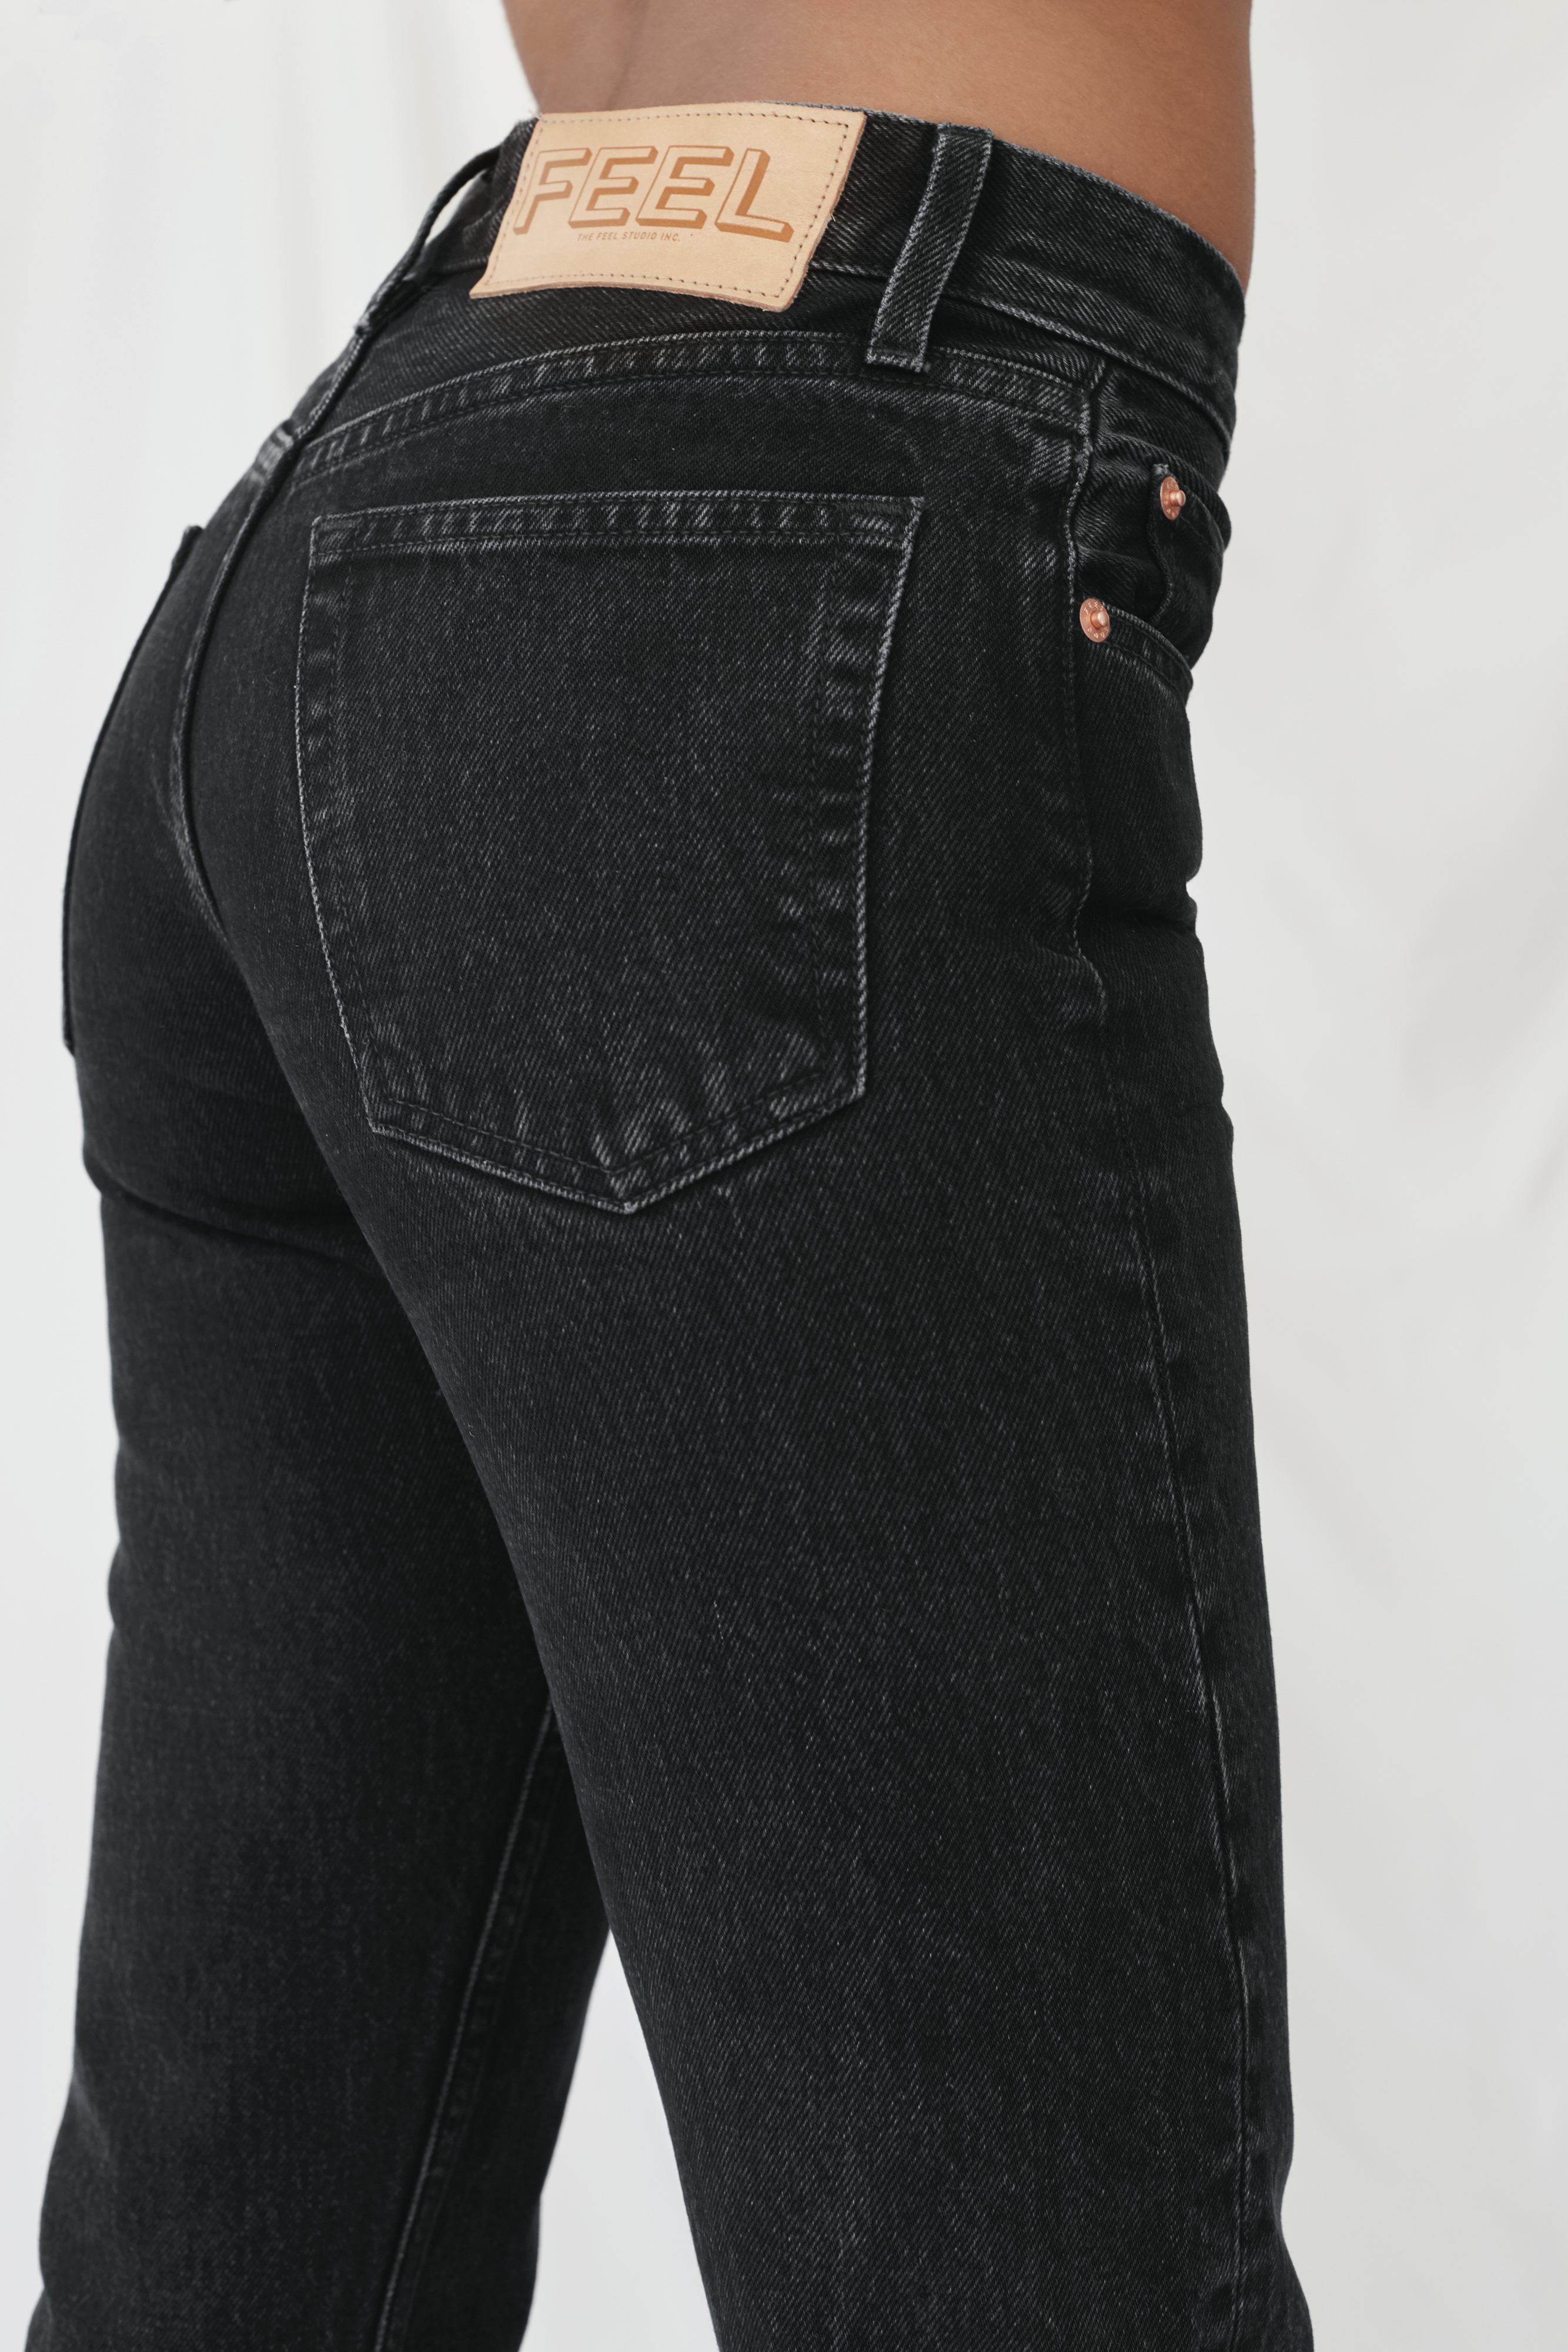 the feel studio jeans